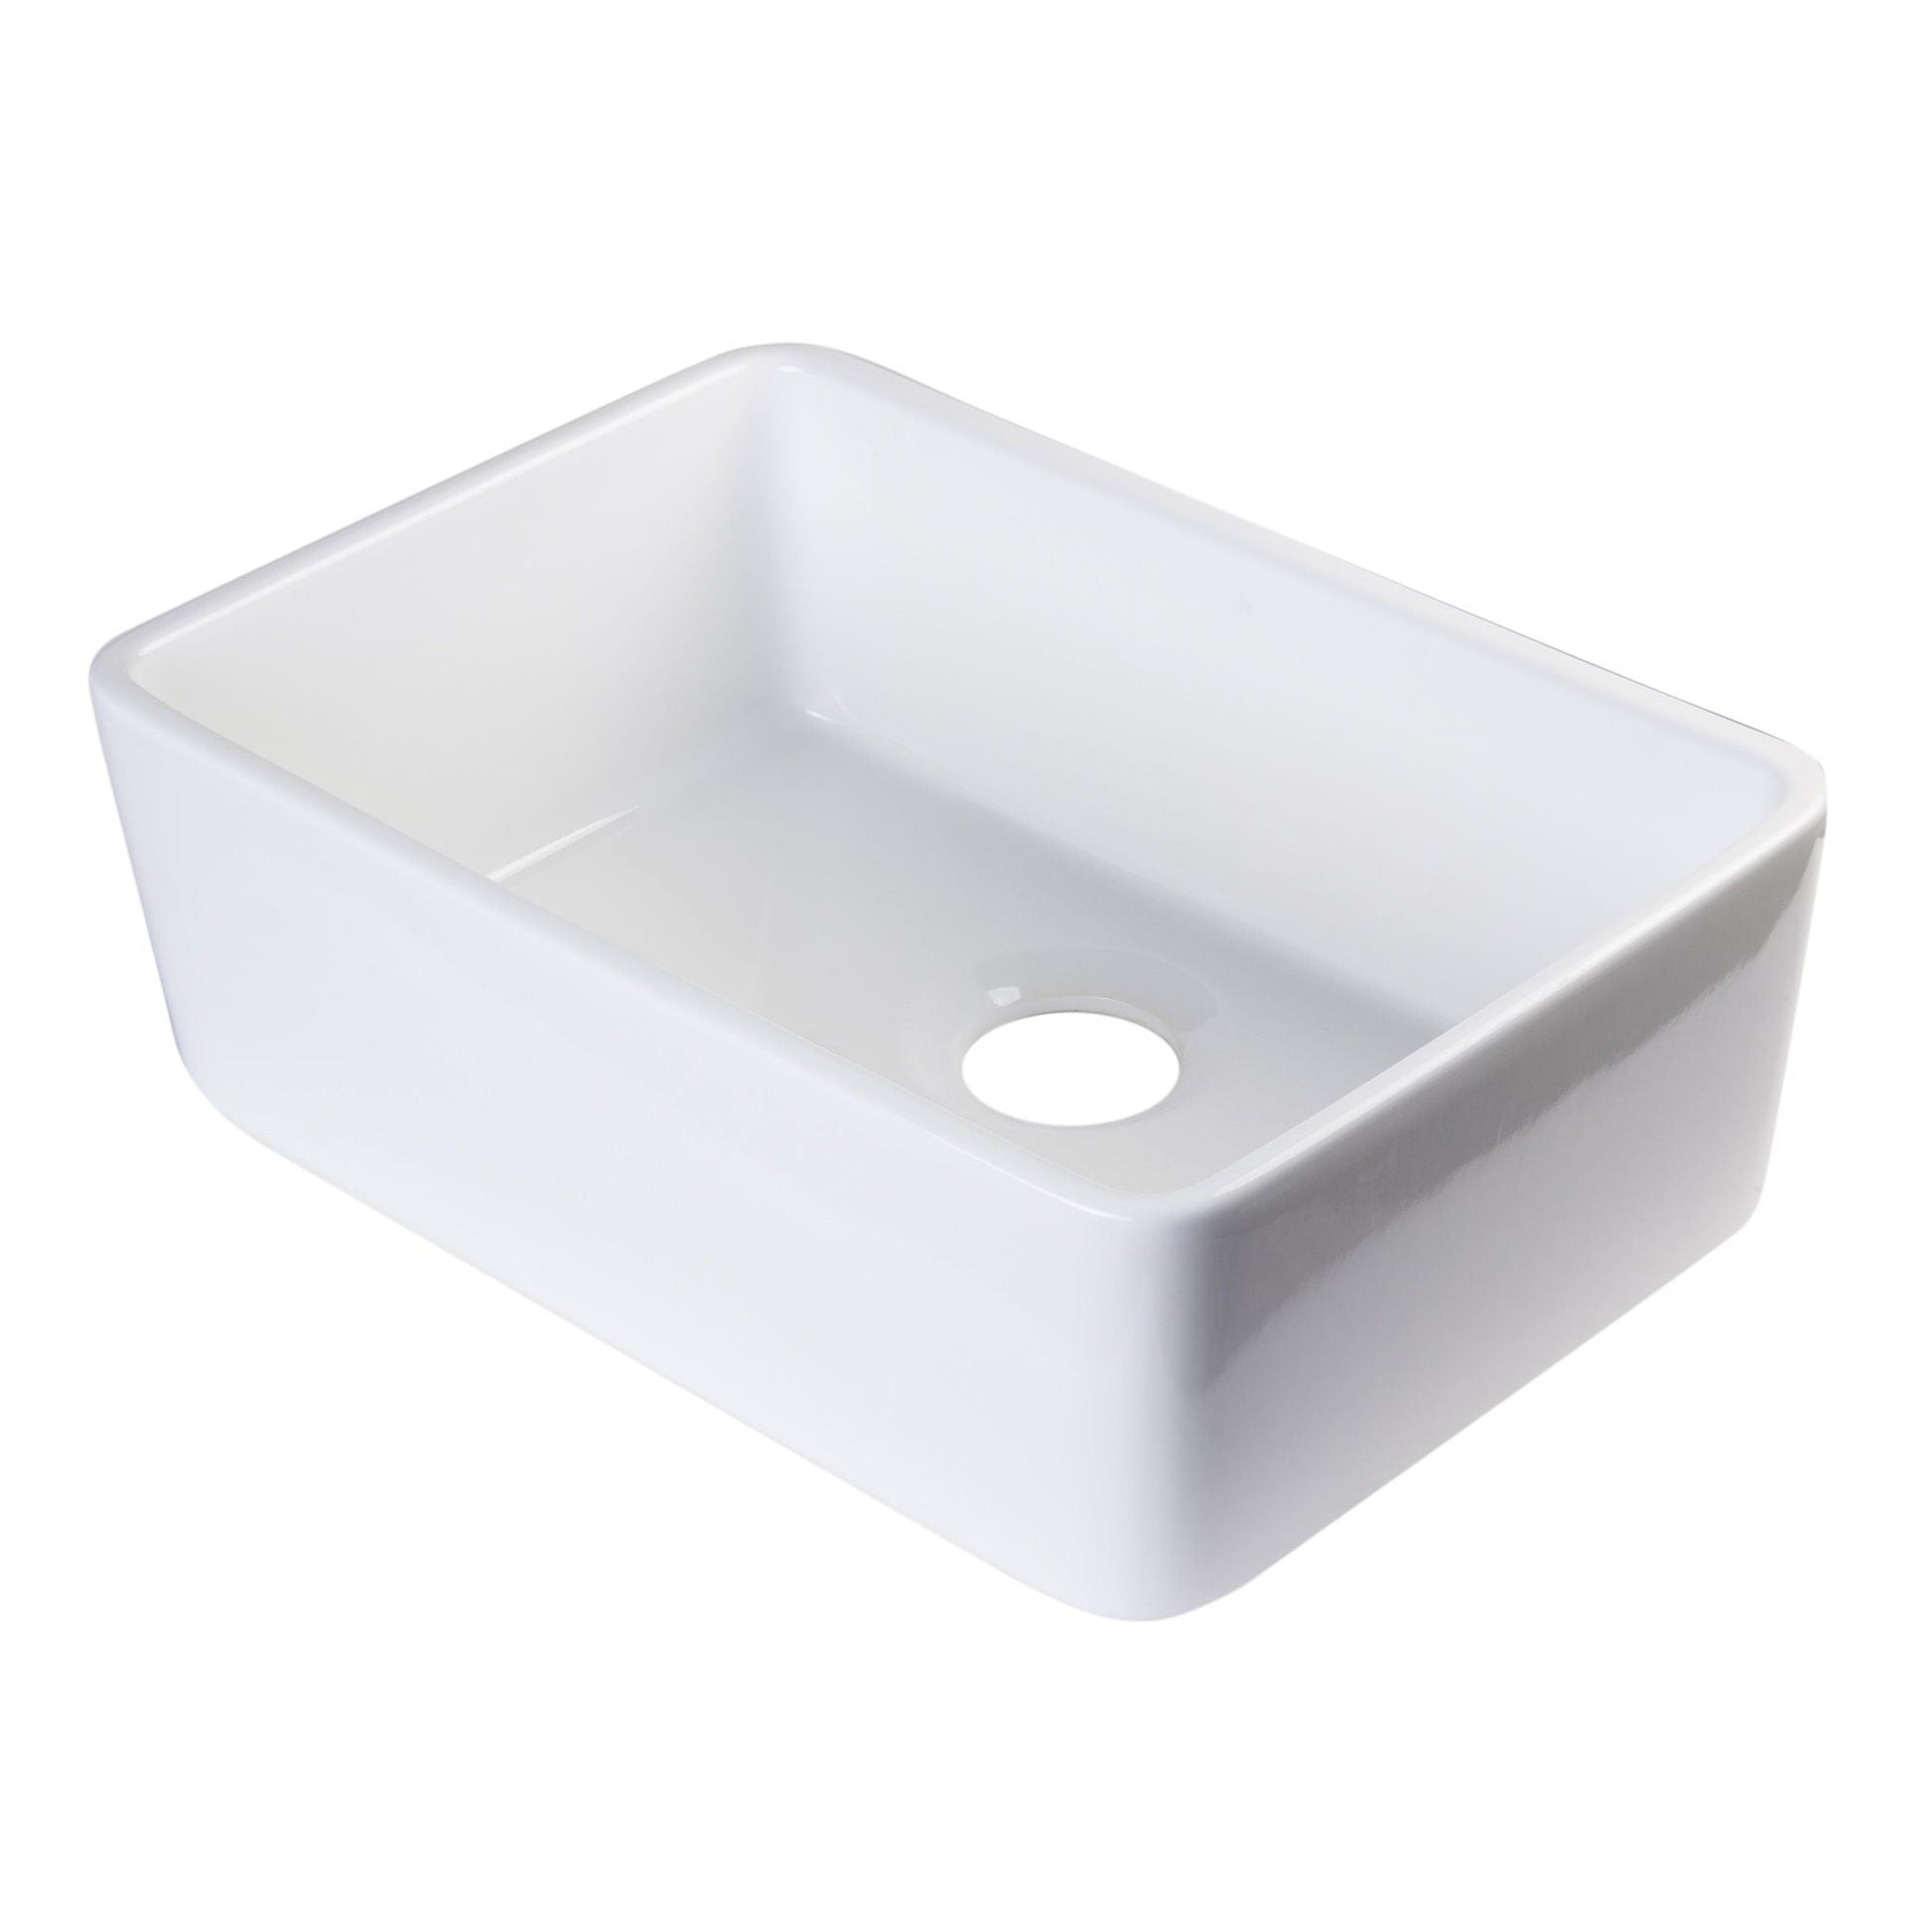 ALFI Brand AB503UM-W 24 inch White Single Bowl Fireclay Undermount Kitchen Sink